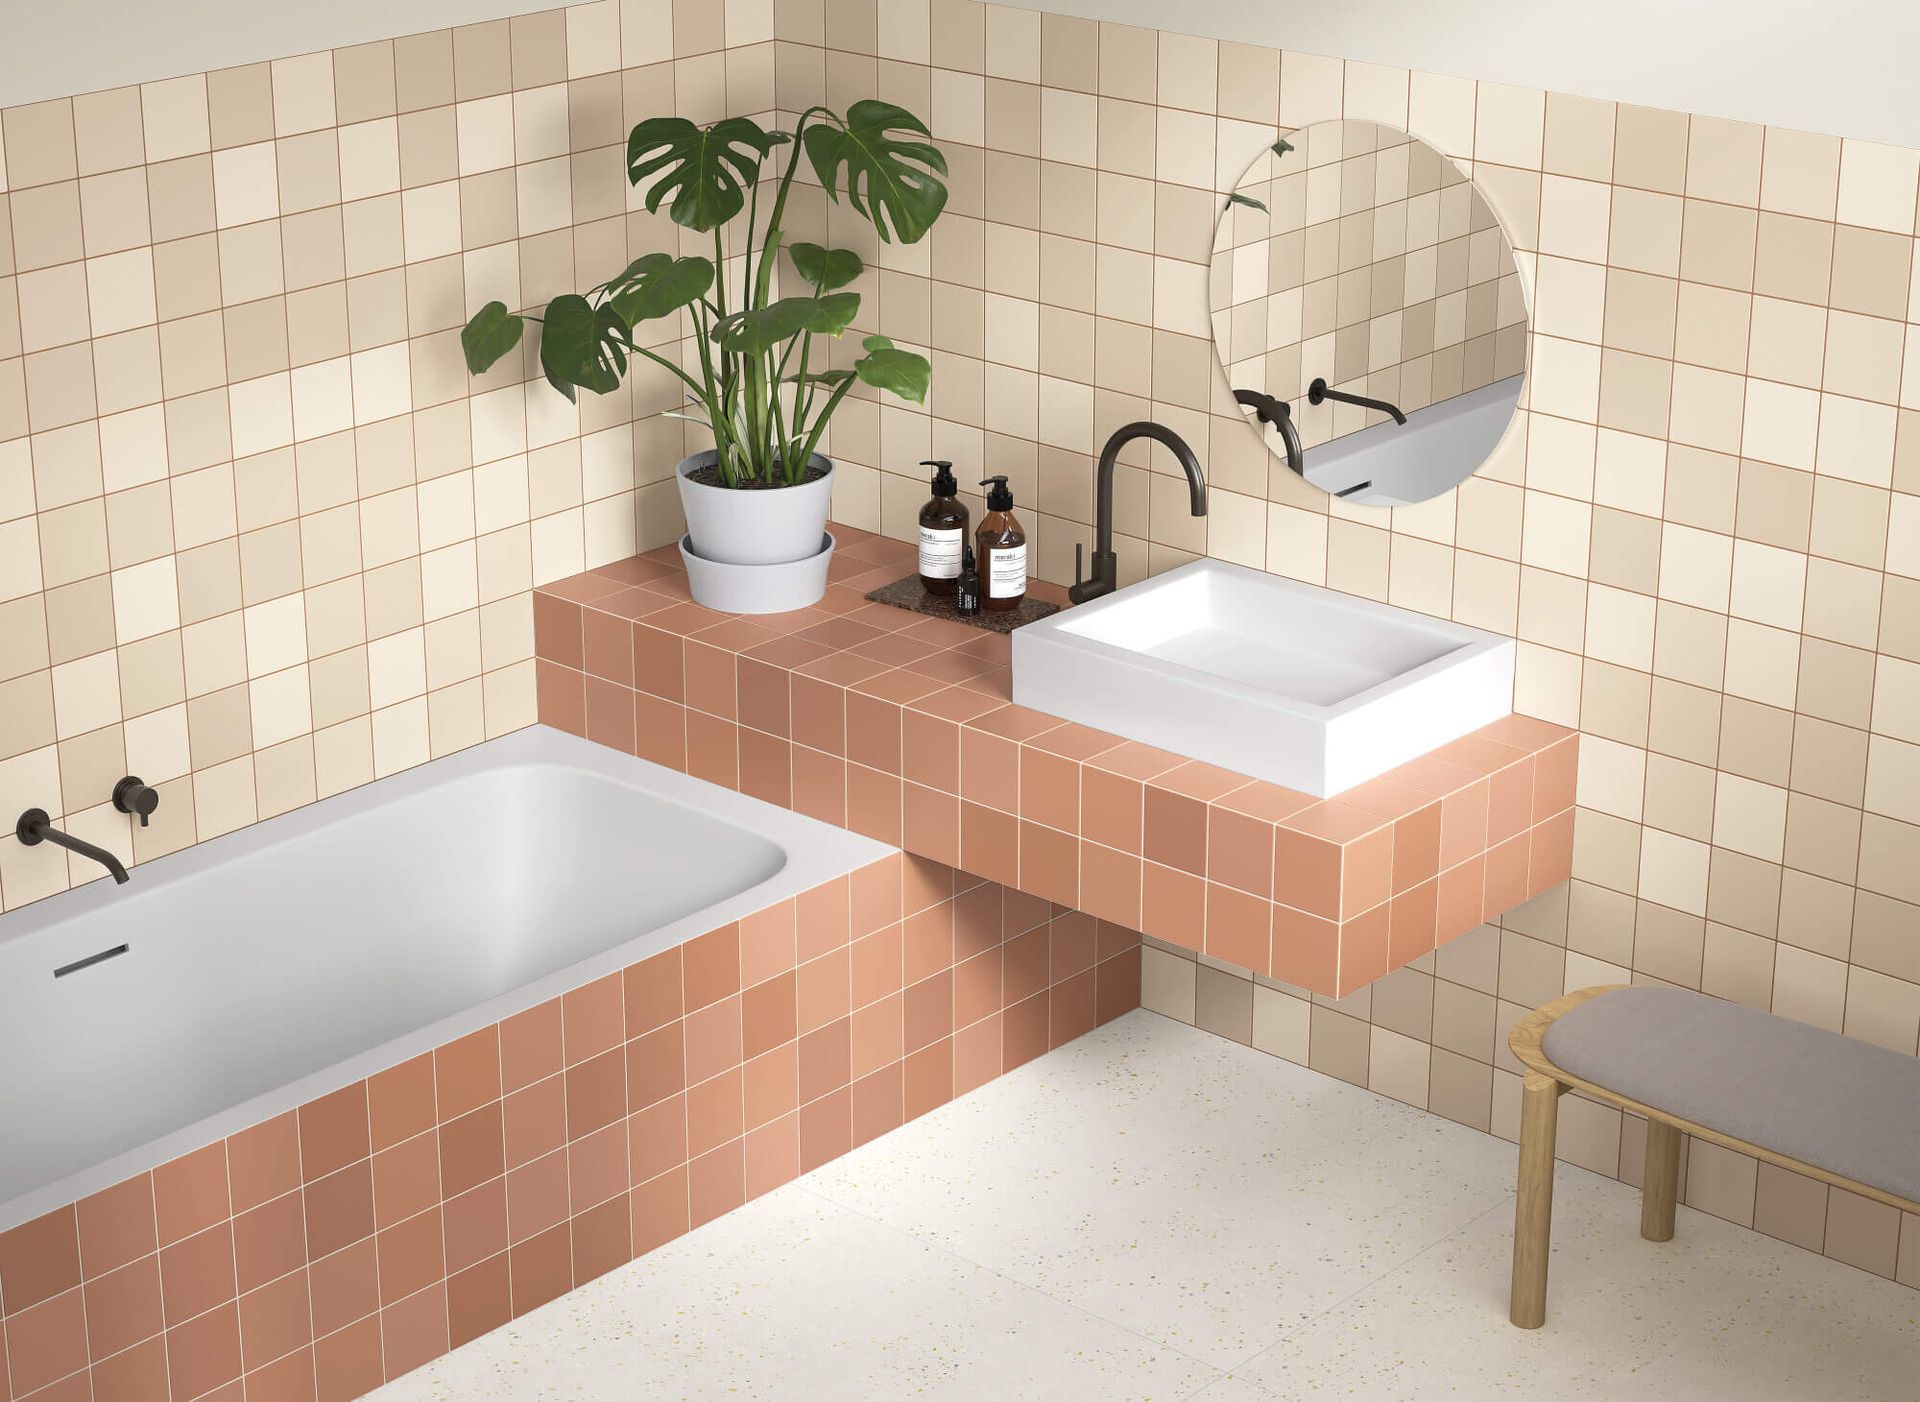 a bath design , using white and orange tiles in a unique bathroom design with a circular mirror